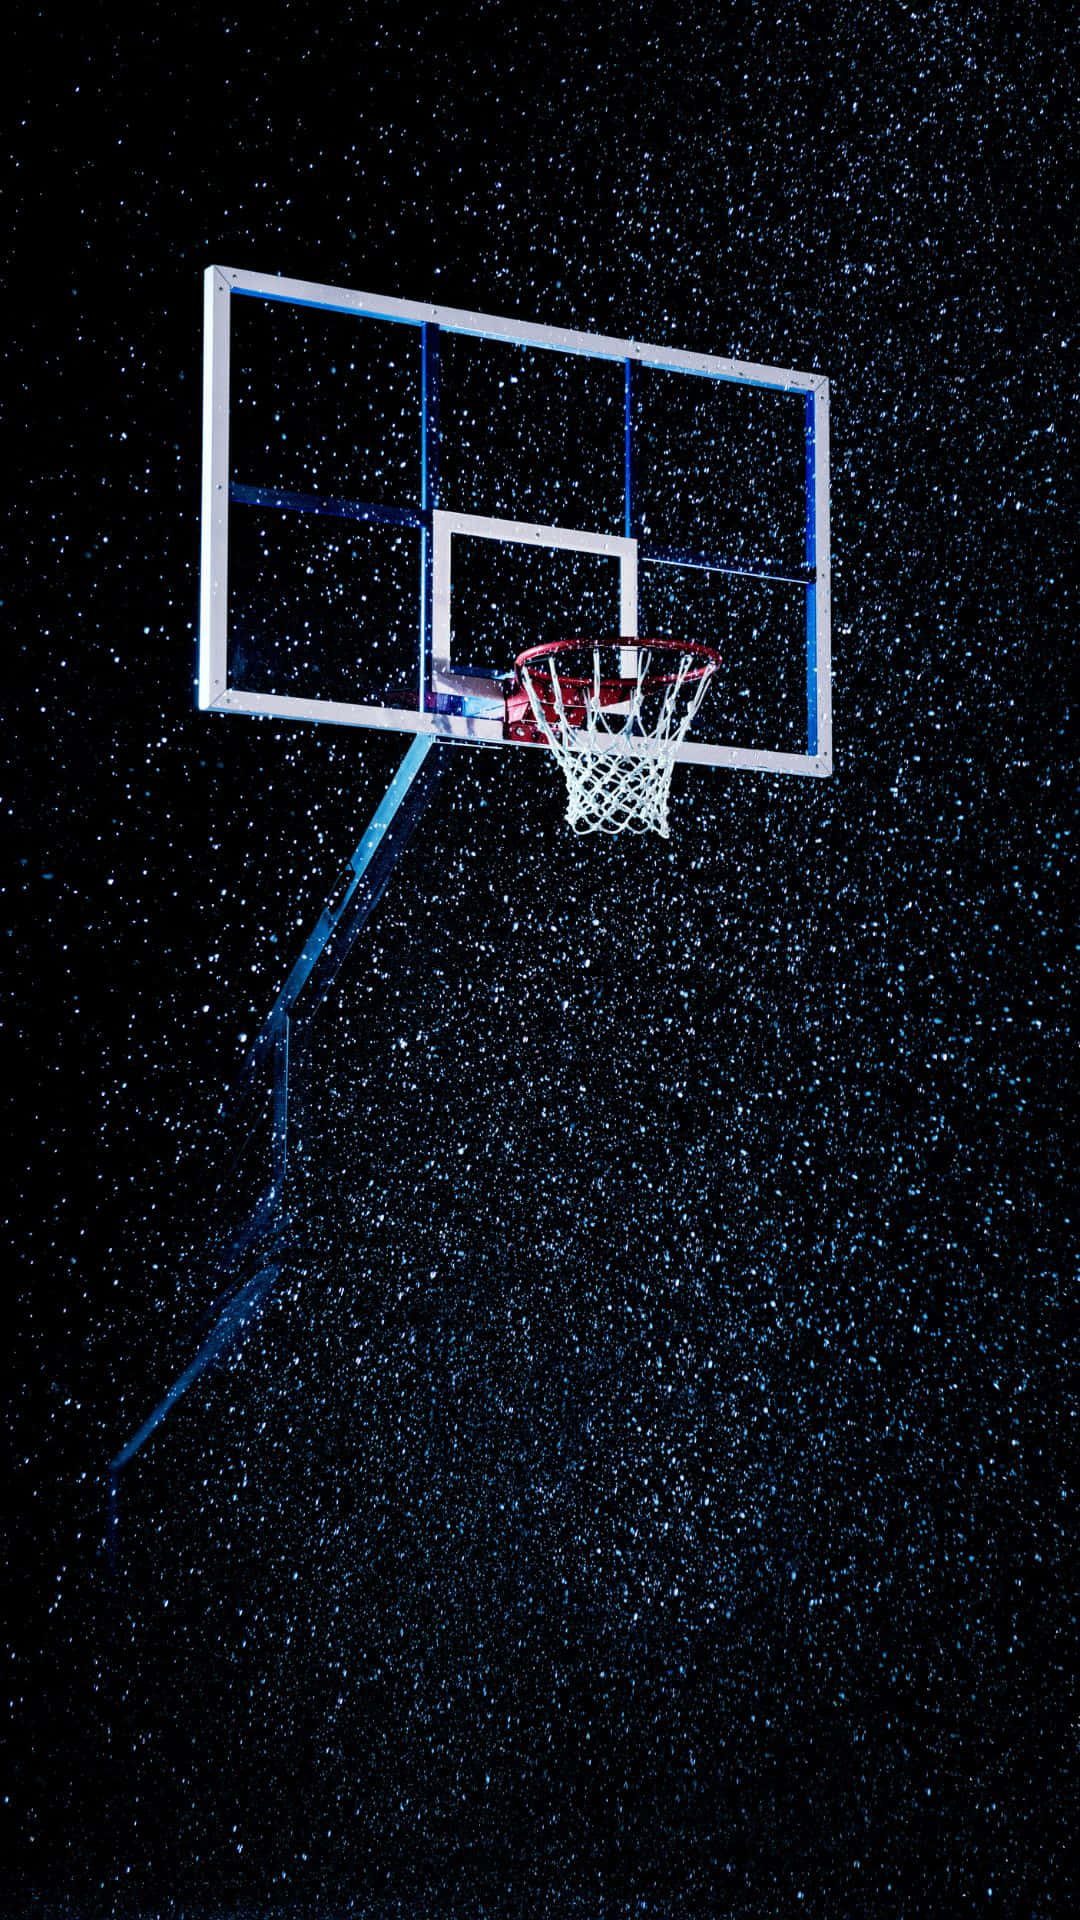 Starry Night Basketball Hoop Wallpaper